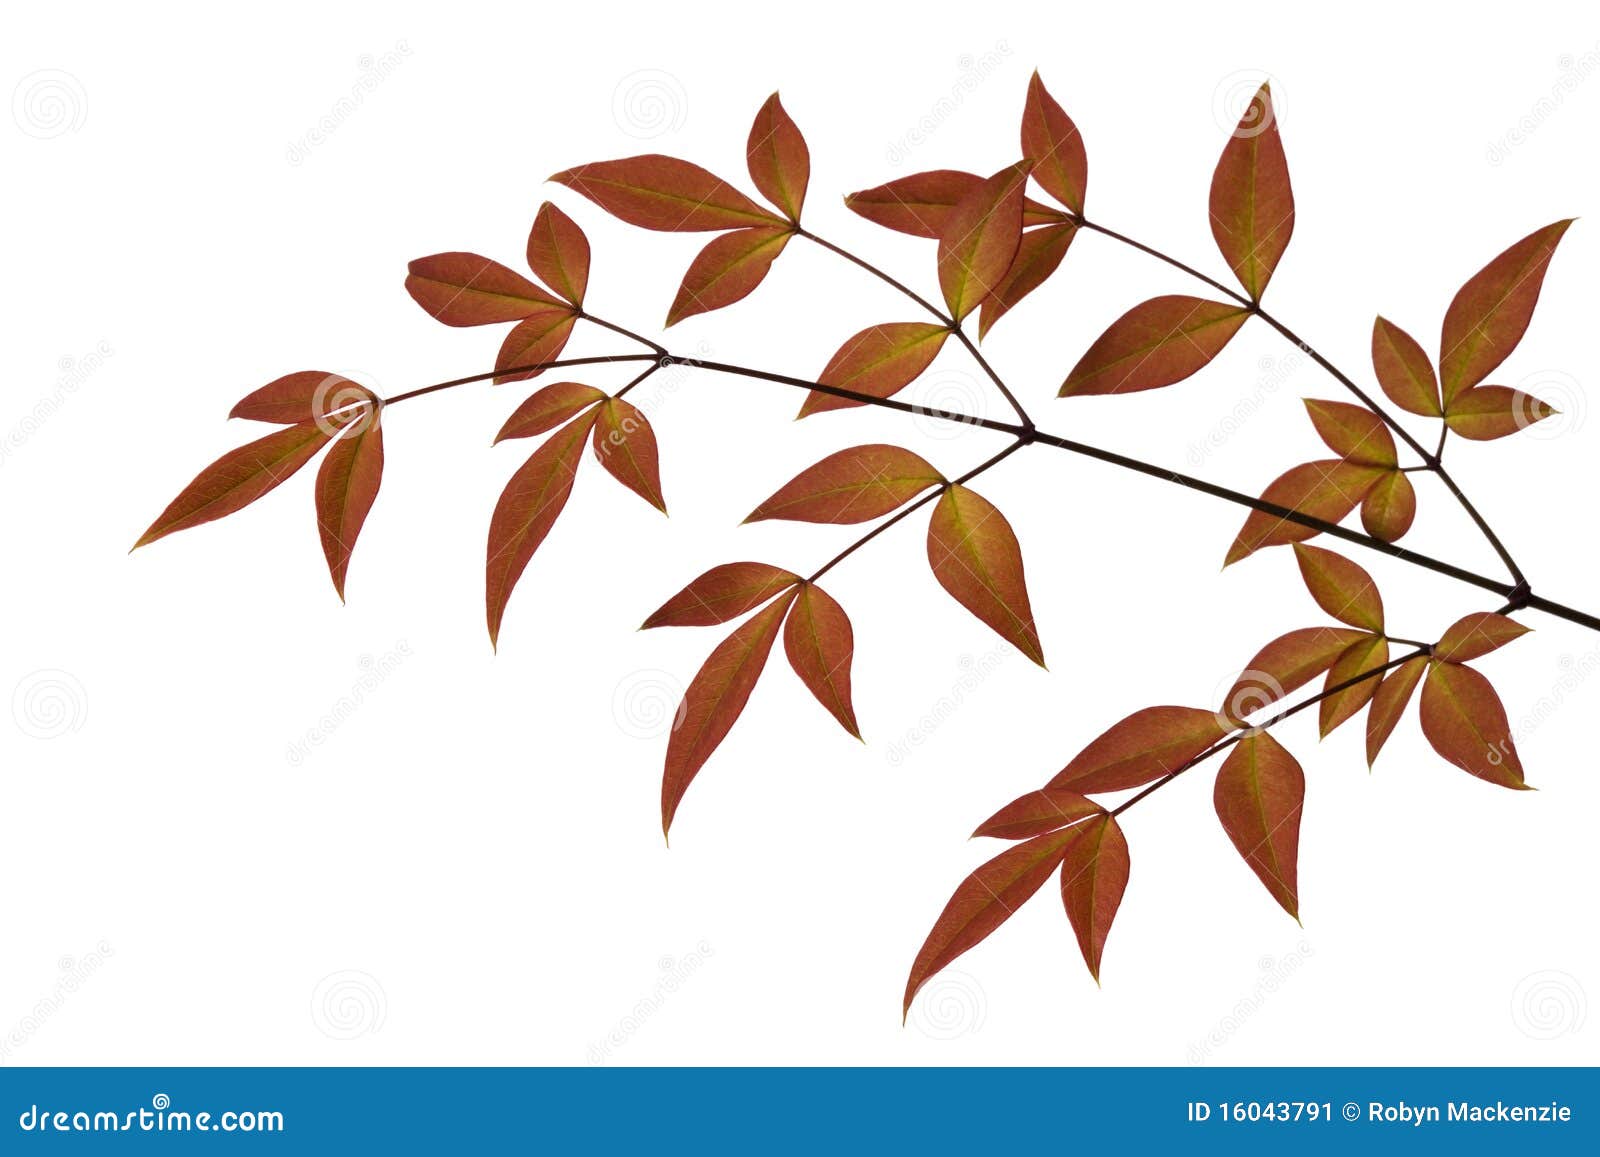 russet leaves